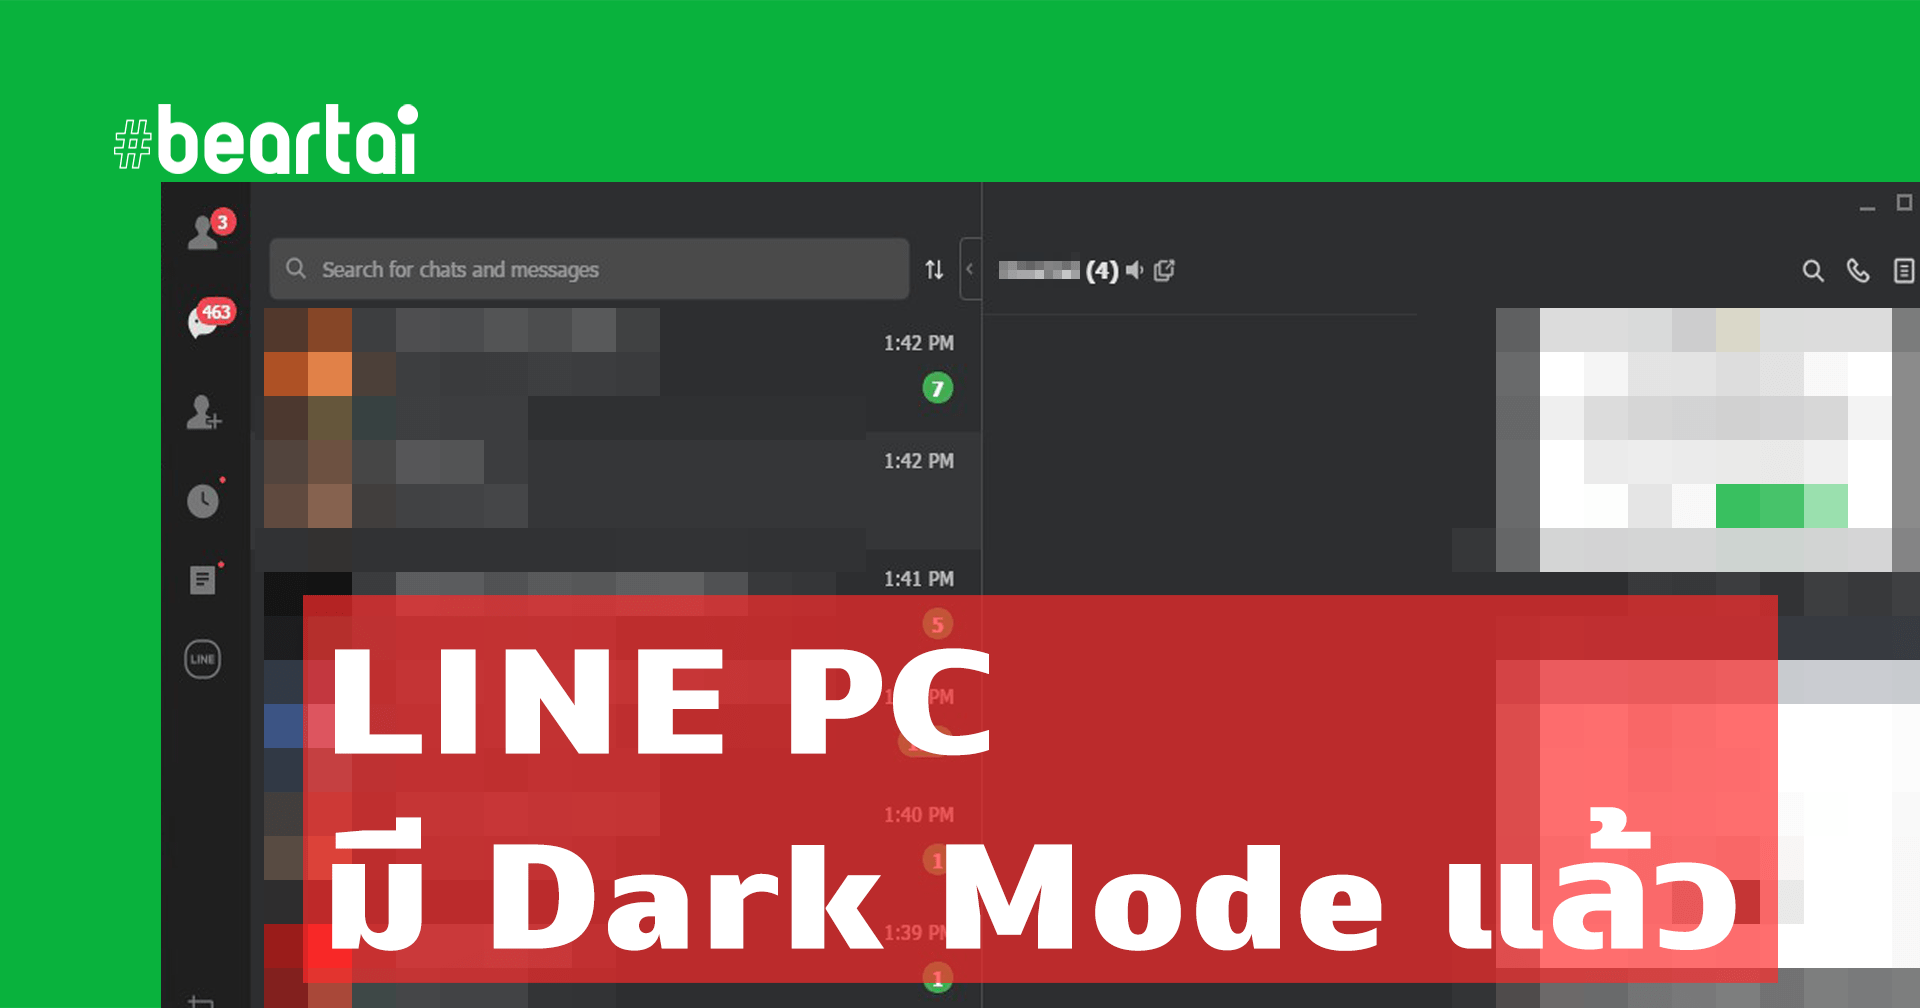 LINE เพิ่ม Dark Mode หรือโหมดมืดสำหรับ PC แล้ว